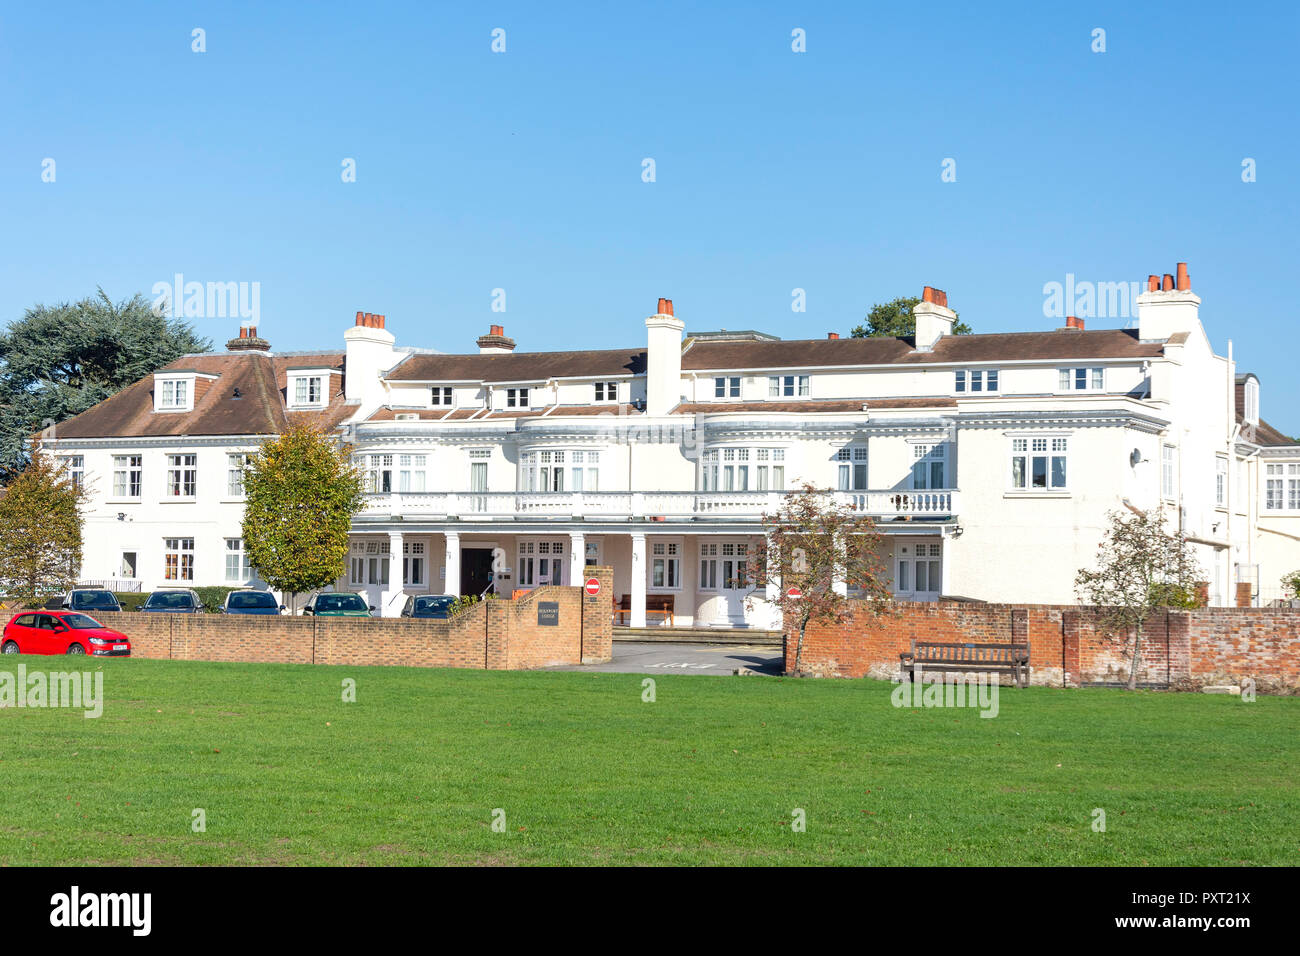 Holyport Lodge Nursing Home, le Livre vert, Holyport, Berkshire, Angleterre, Royaume-Uni Banque D'Images